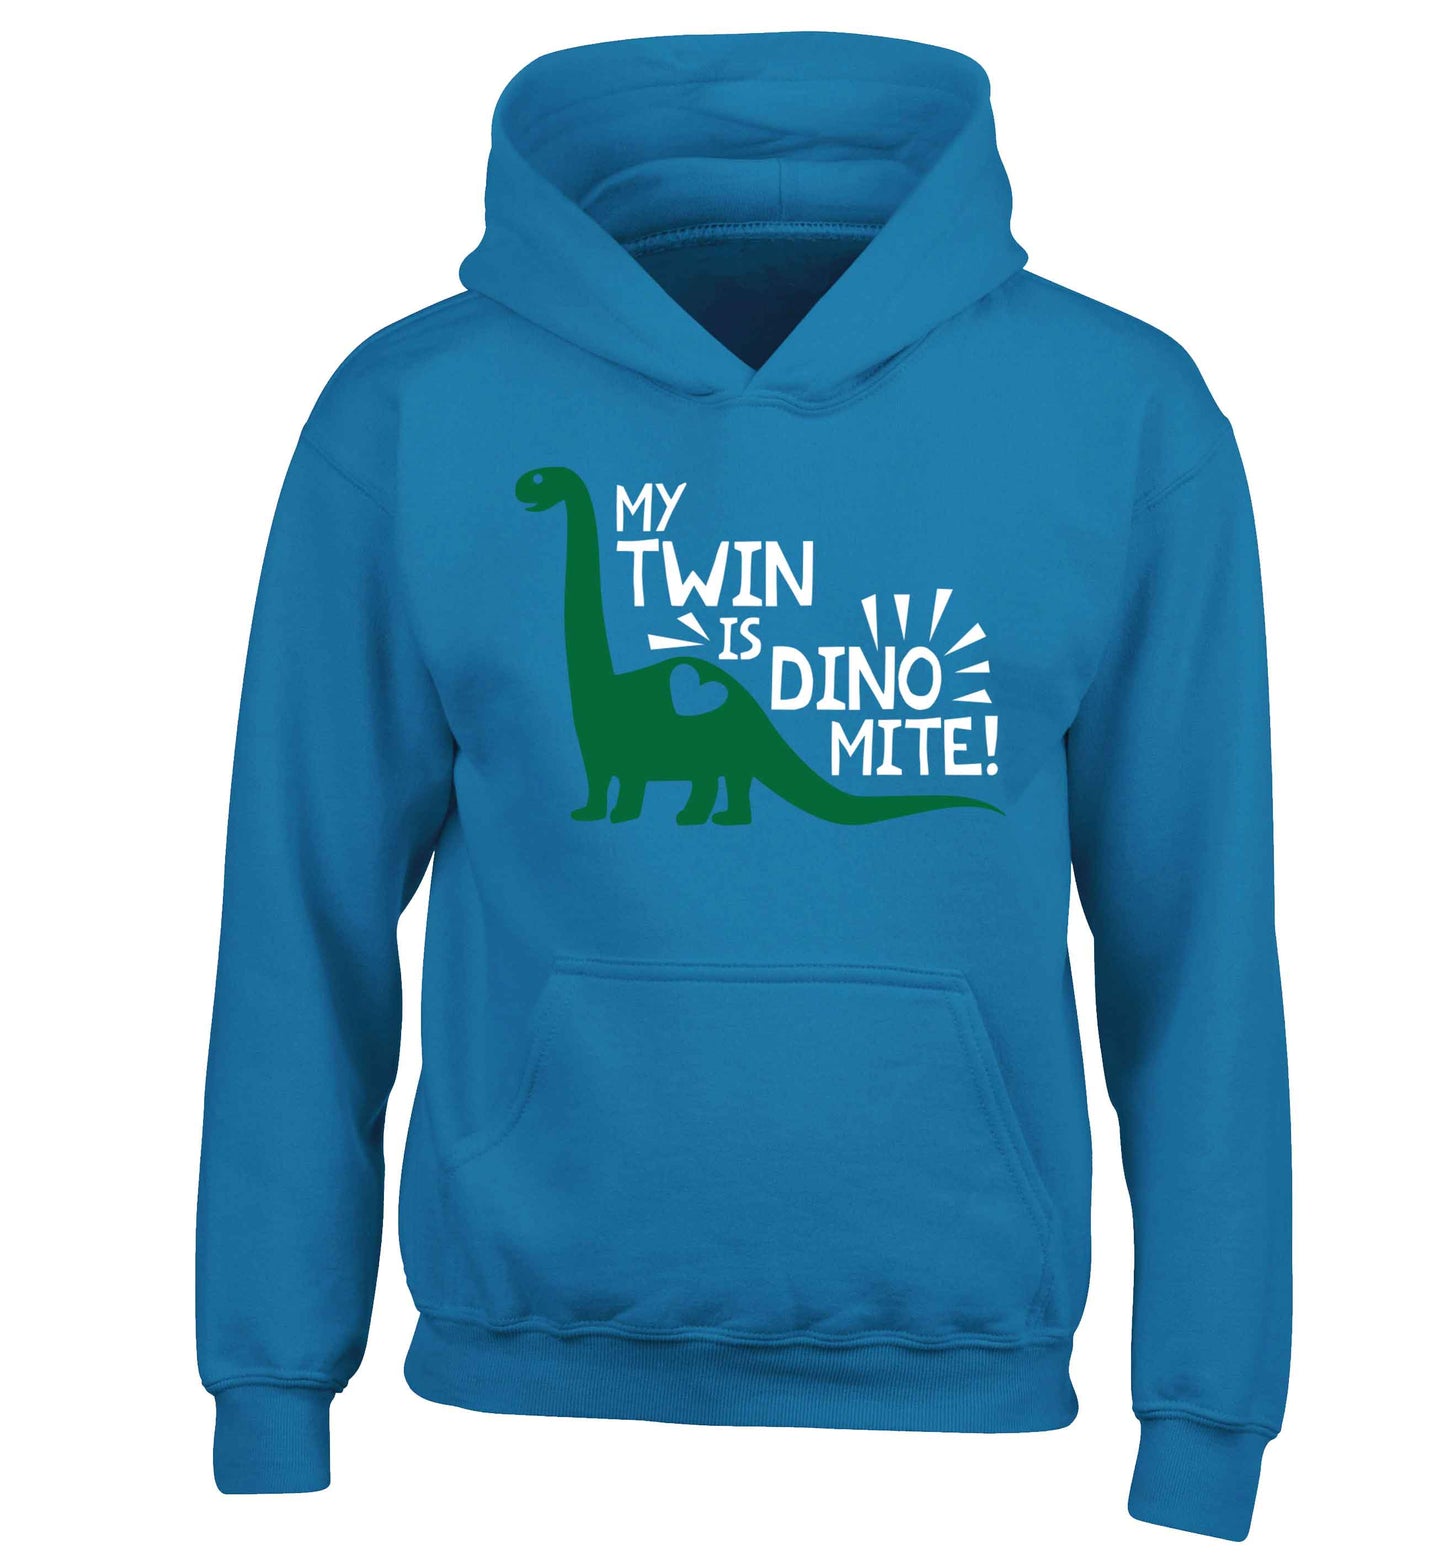 My twin is dinomite! children's blue hoodie 12-13 Years